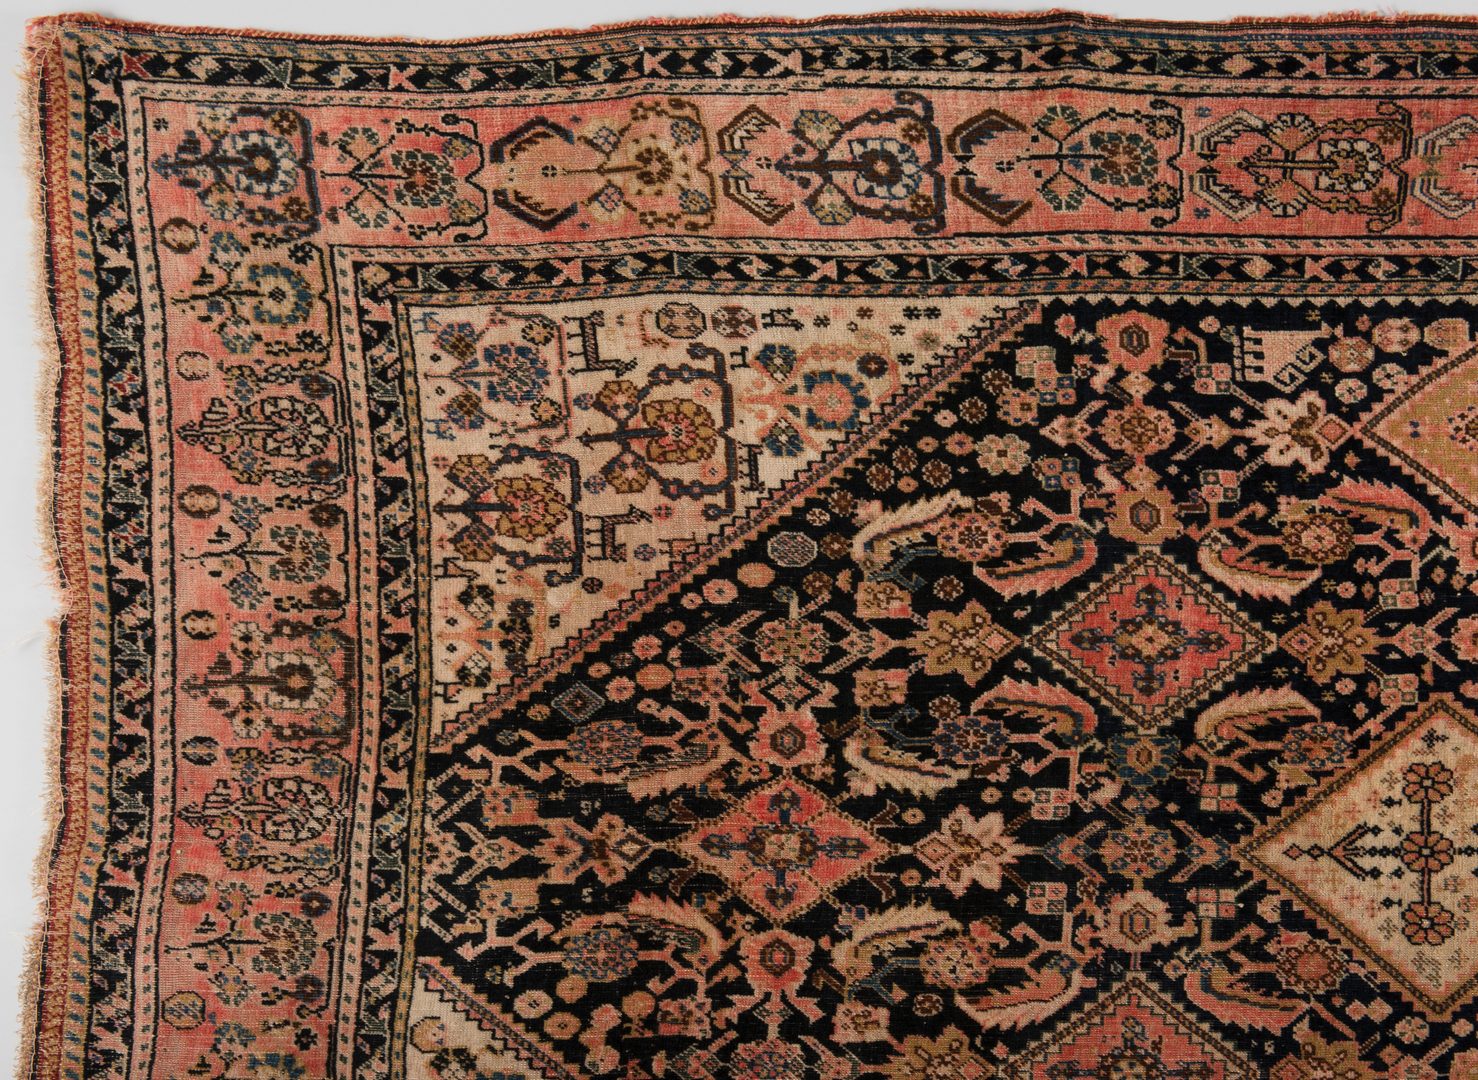 Lot 308: Southwest Persian Rug, 6'5" x 4'1"